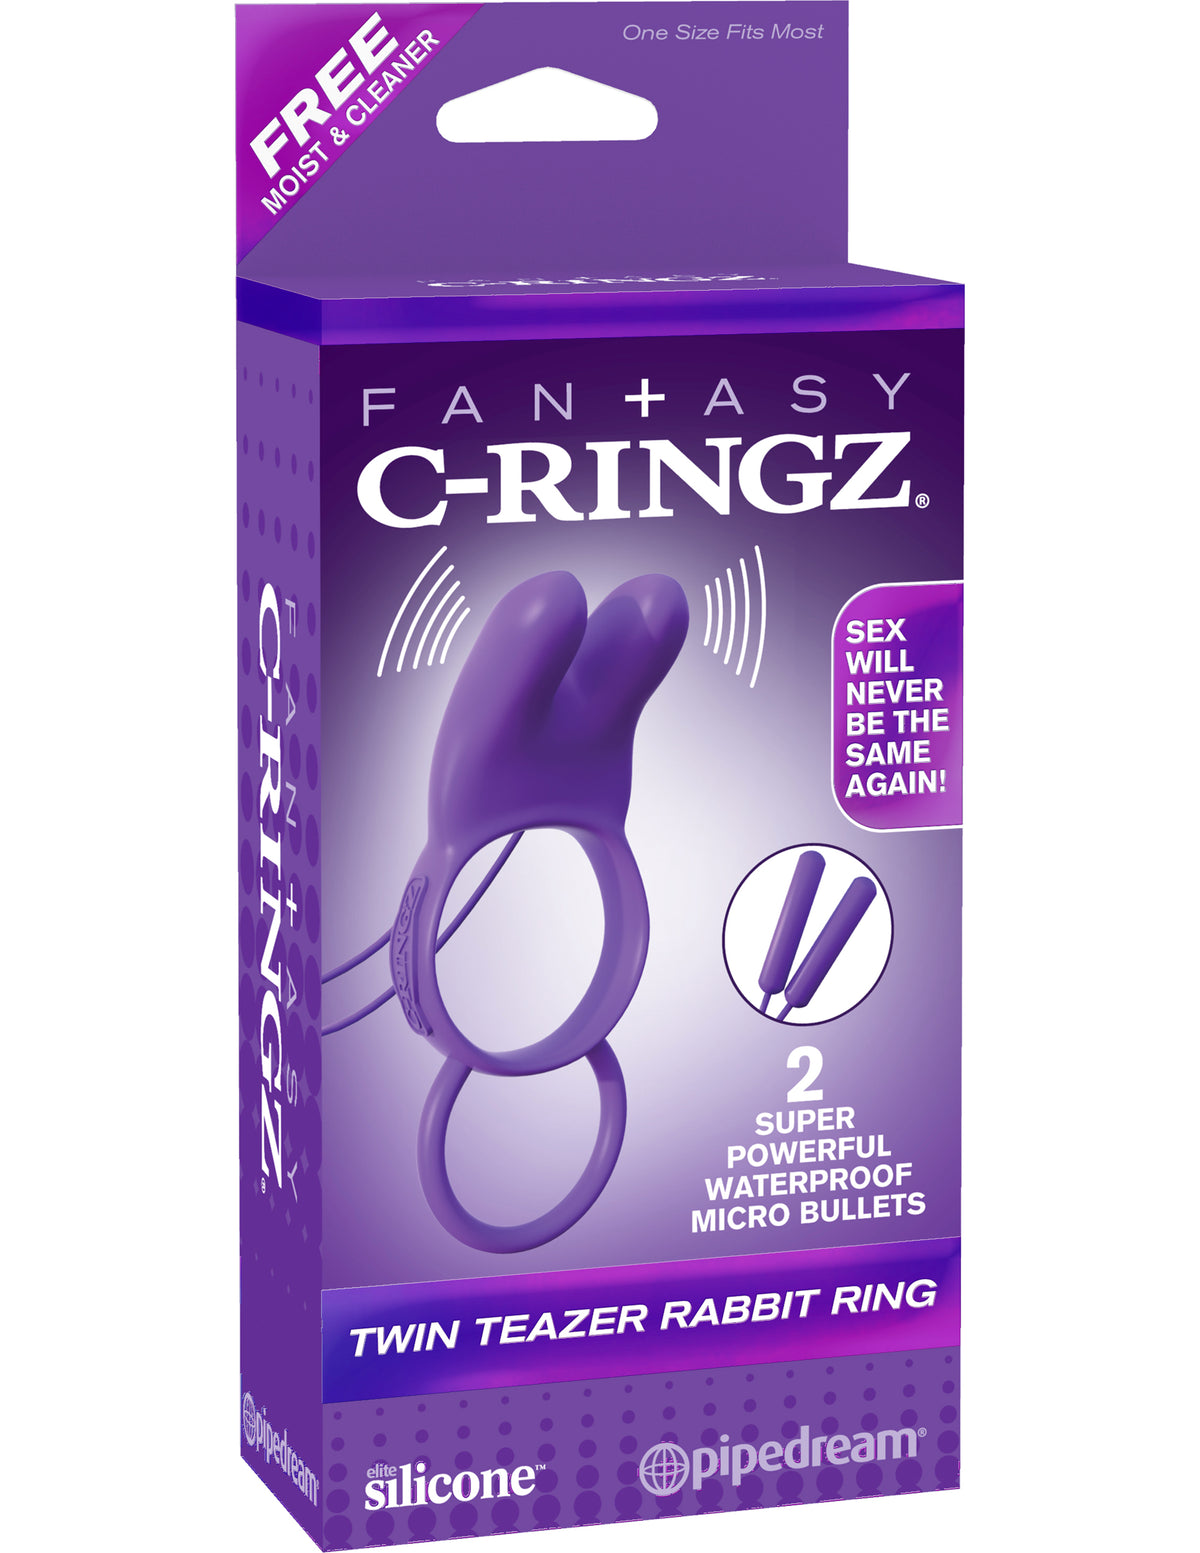 Fantasy C-ringz Twin Teazer Rabbit Ring